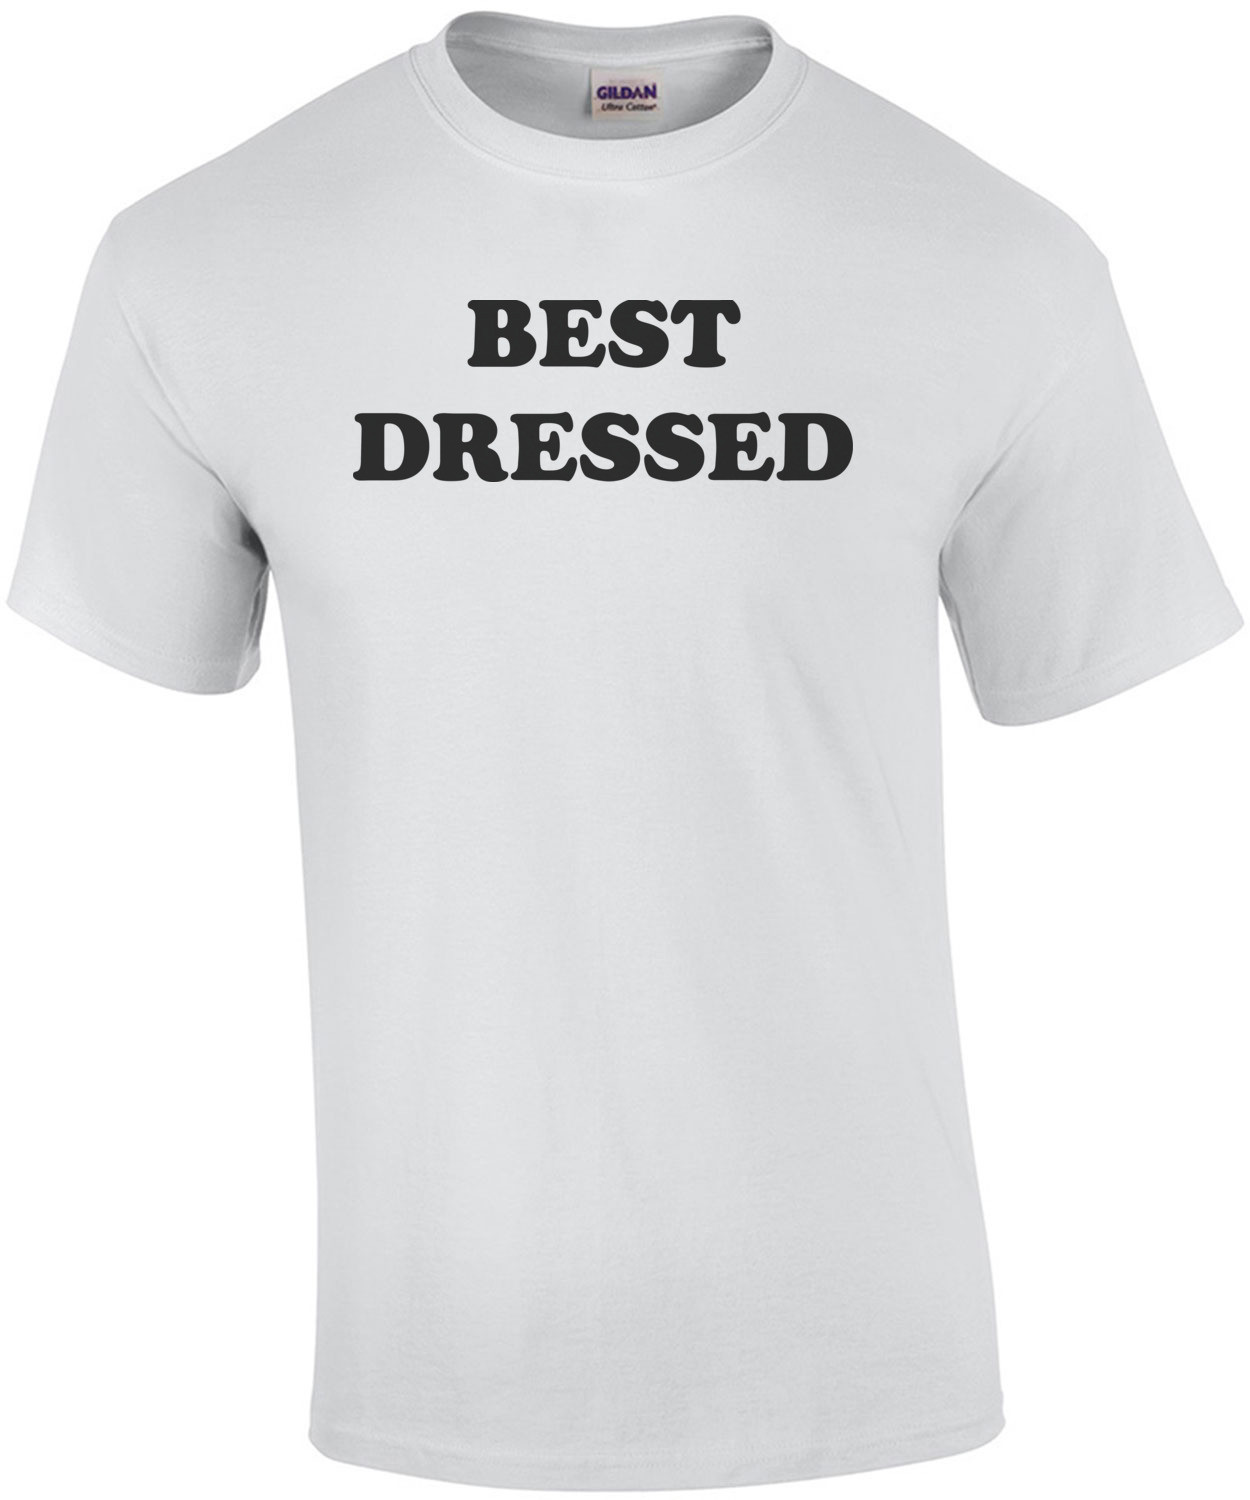 BEST DRESSED - funny t-shirt Shirt